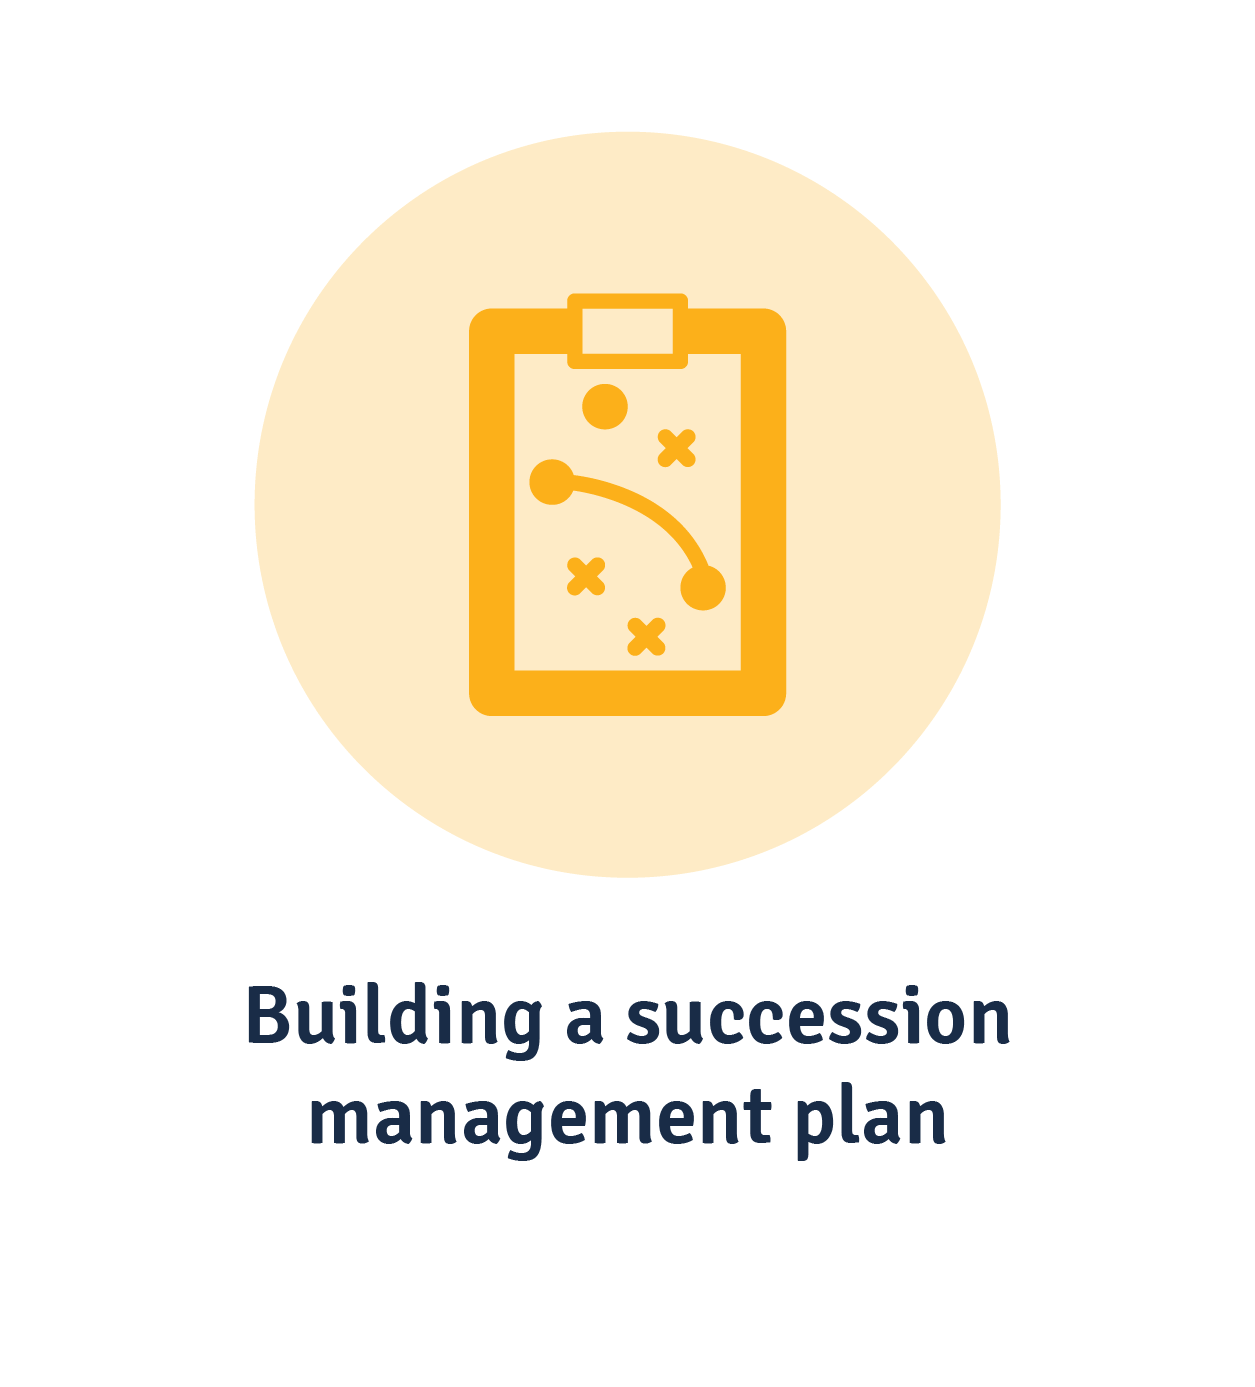 How to build a succession management plan